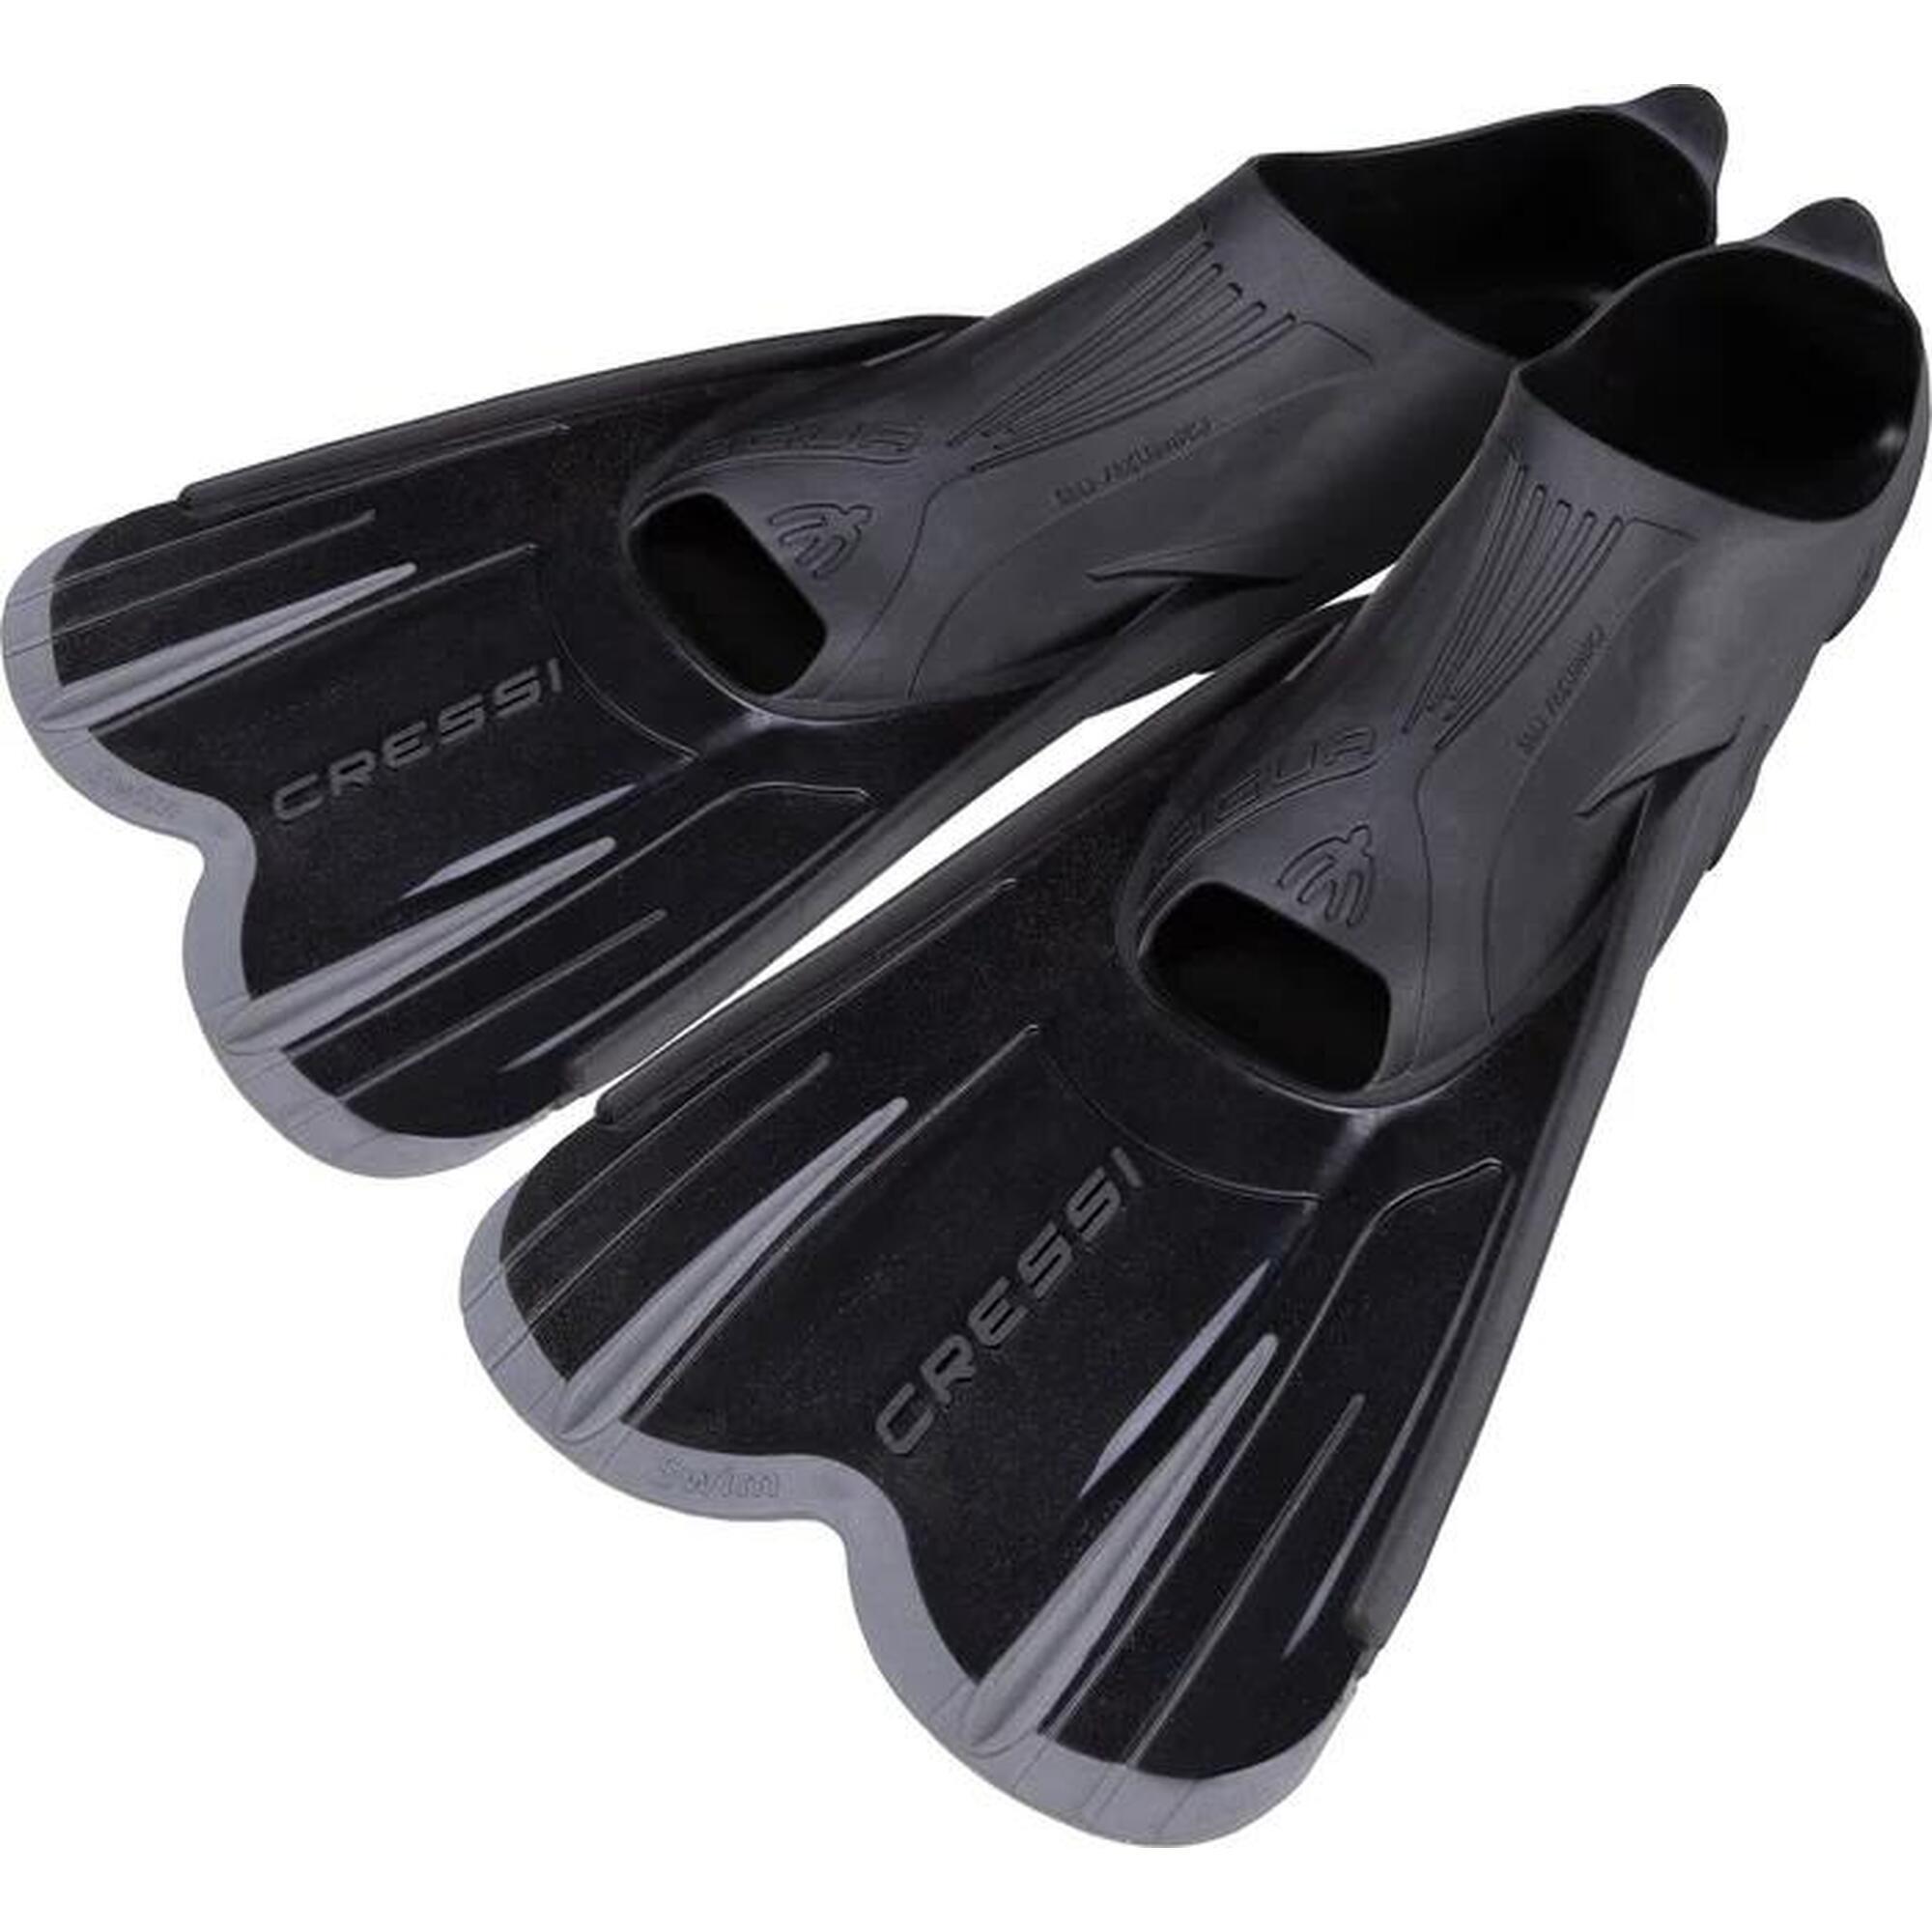 Agua Short Fins Short blade swimming fins - Black 39/40